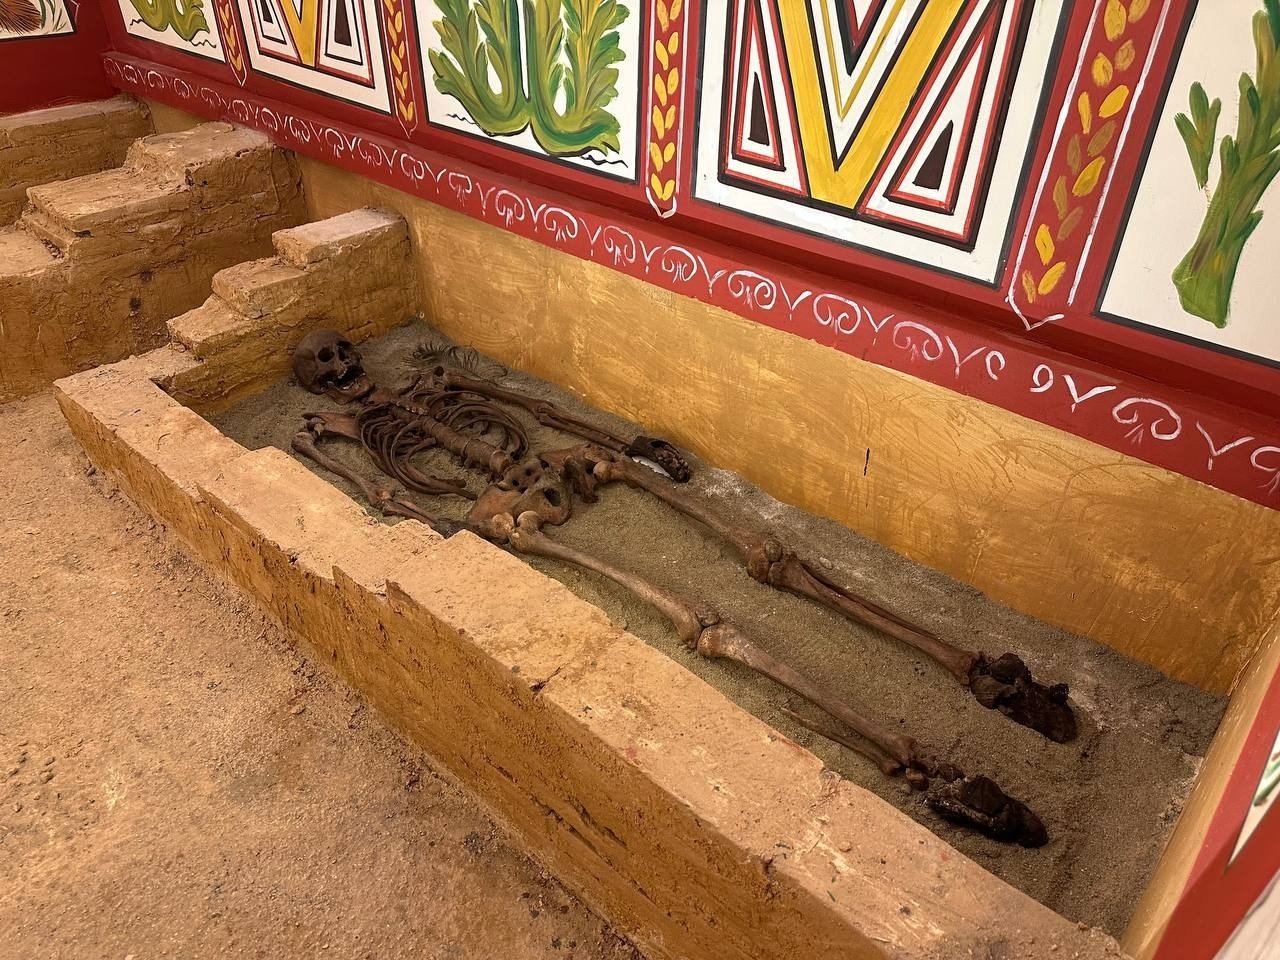 One of the tombs displayed in the Iznik Archaeology Museum, Bursa, Türkiye, Jan. 15, 2023. (IHA Photo)